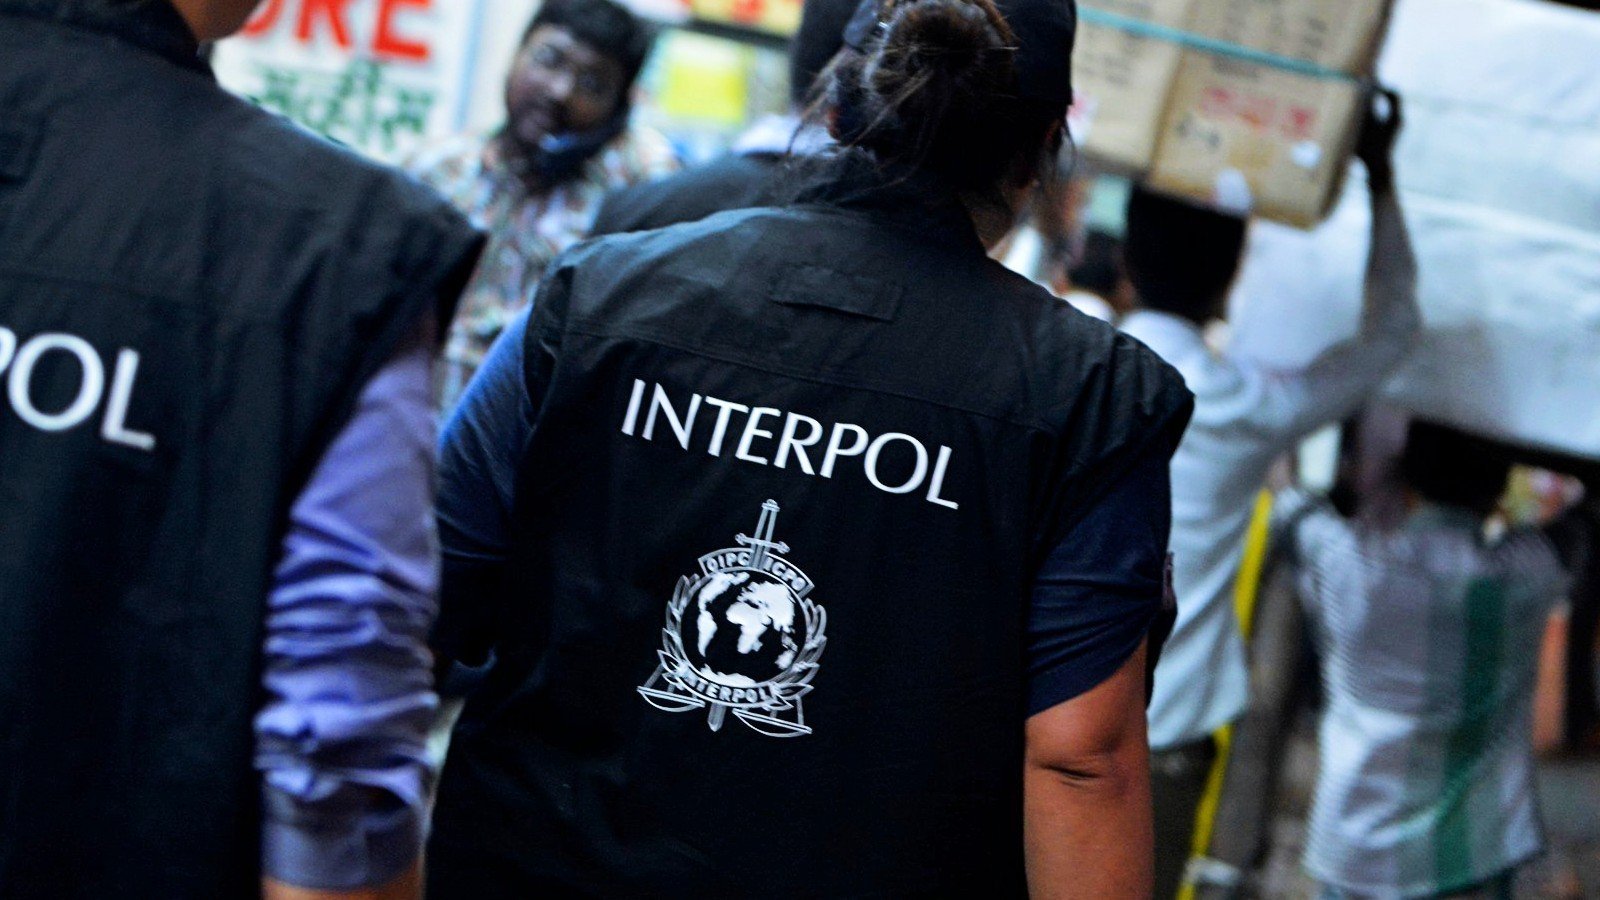 Interpol arrests 14 suspected cybercriminals for stealing $40 million – Source: www.bleepingcomputer.com